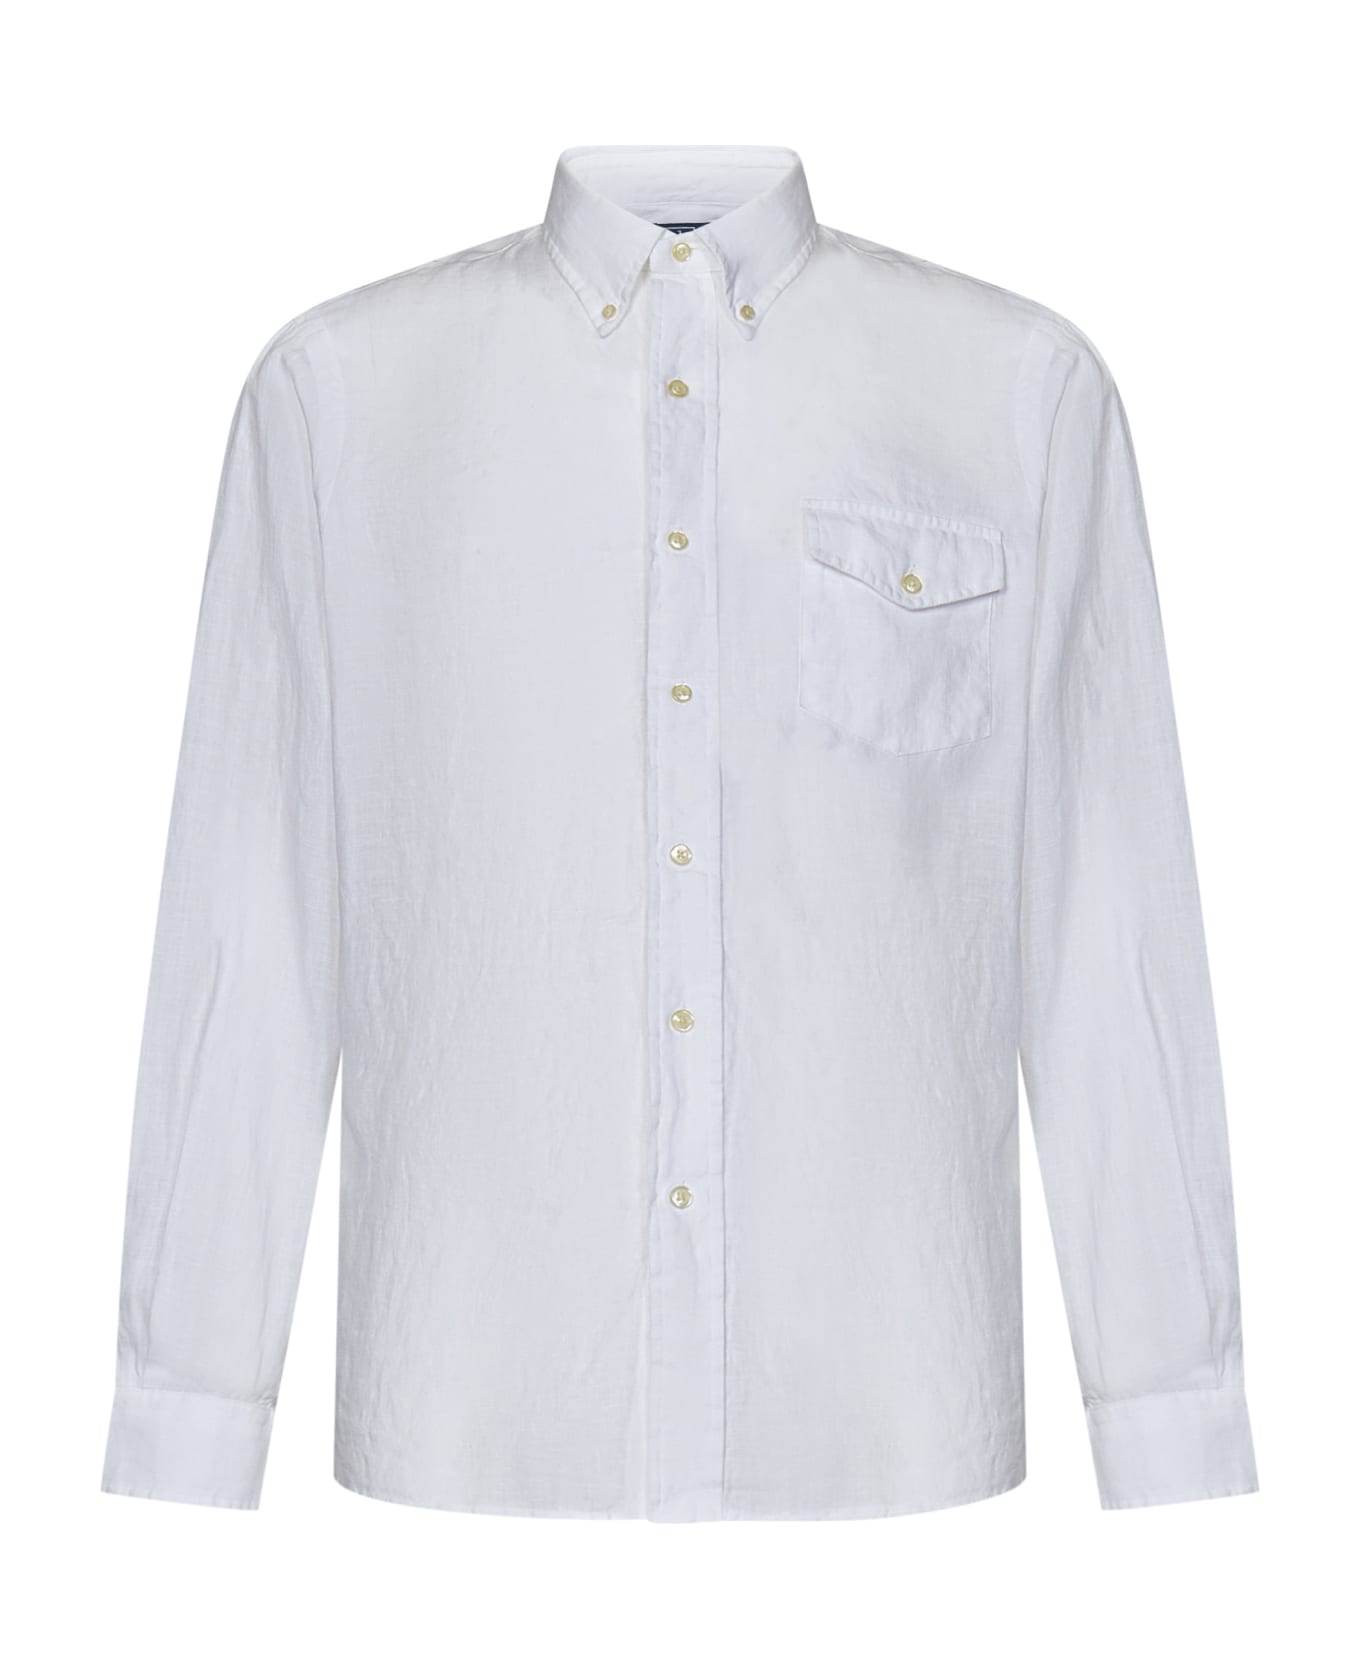 Polo Ralph Lauren White Linen Shirt - White